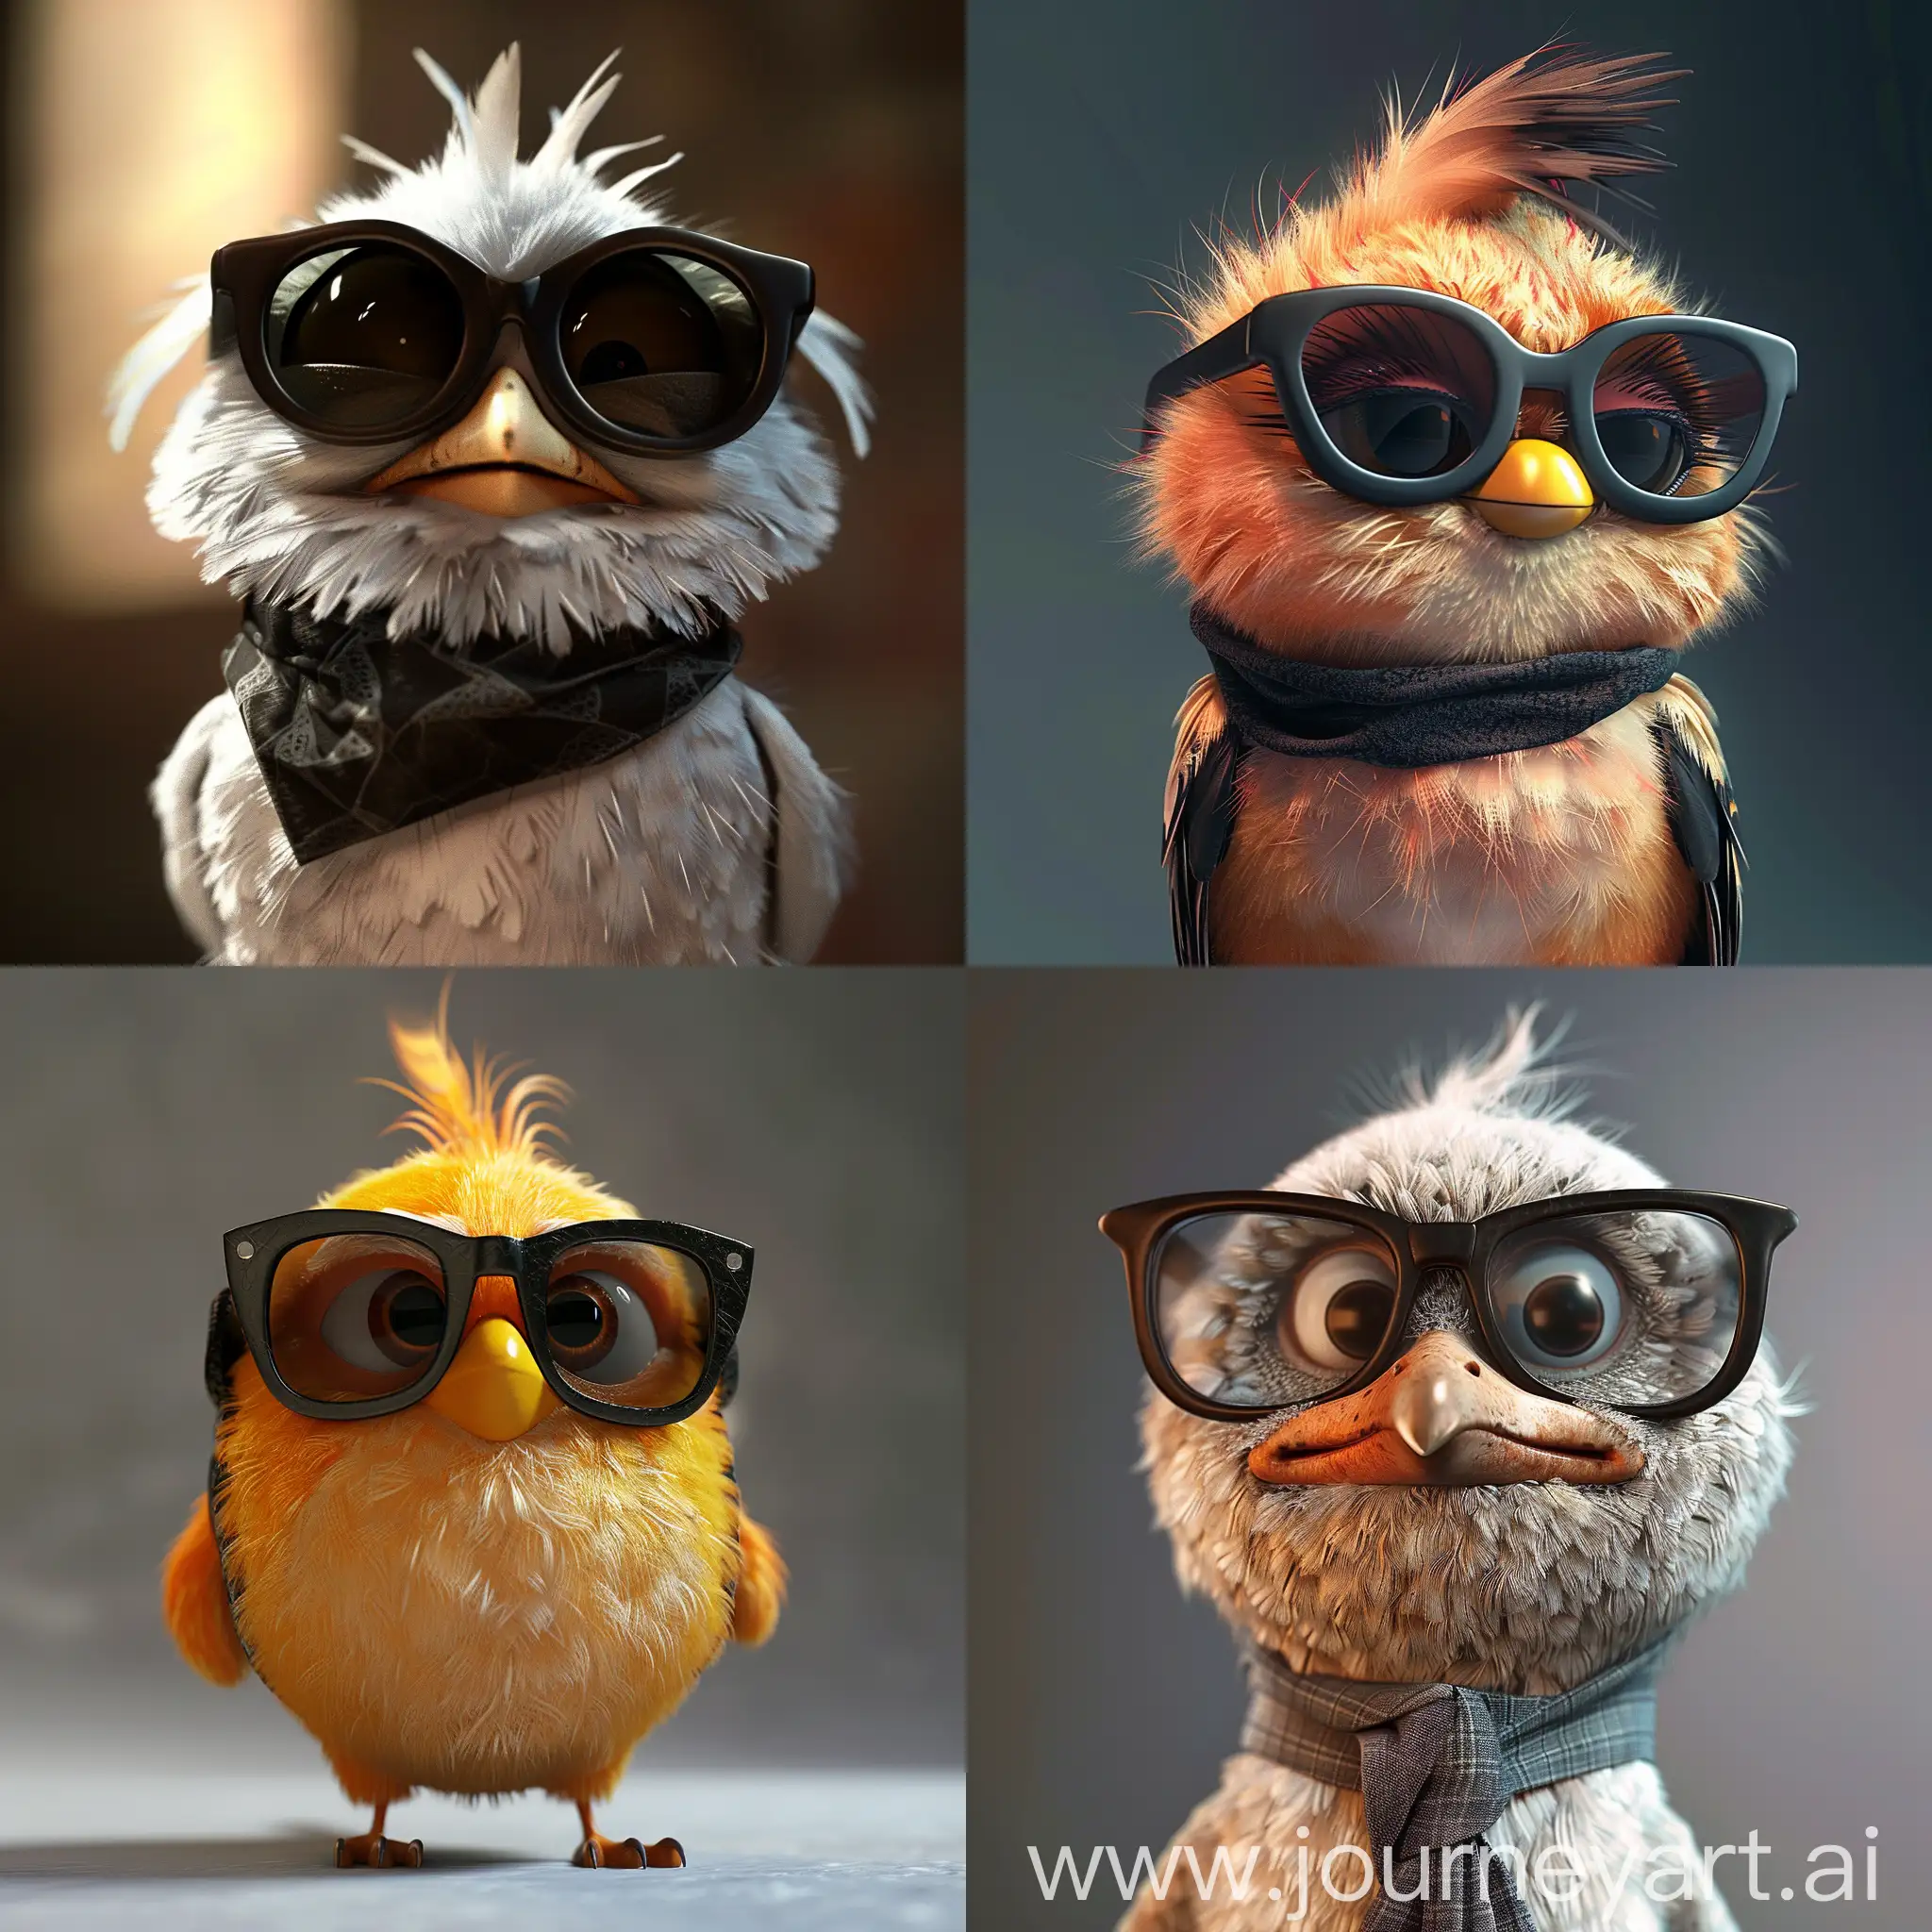 Cool-Smuggler-Bird-Twitter-X-with-Black-Glasses-Pixar-Style-3D-Image